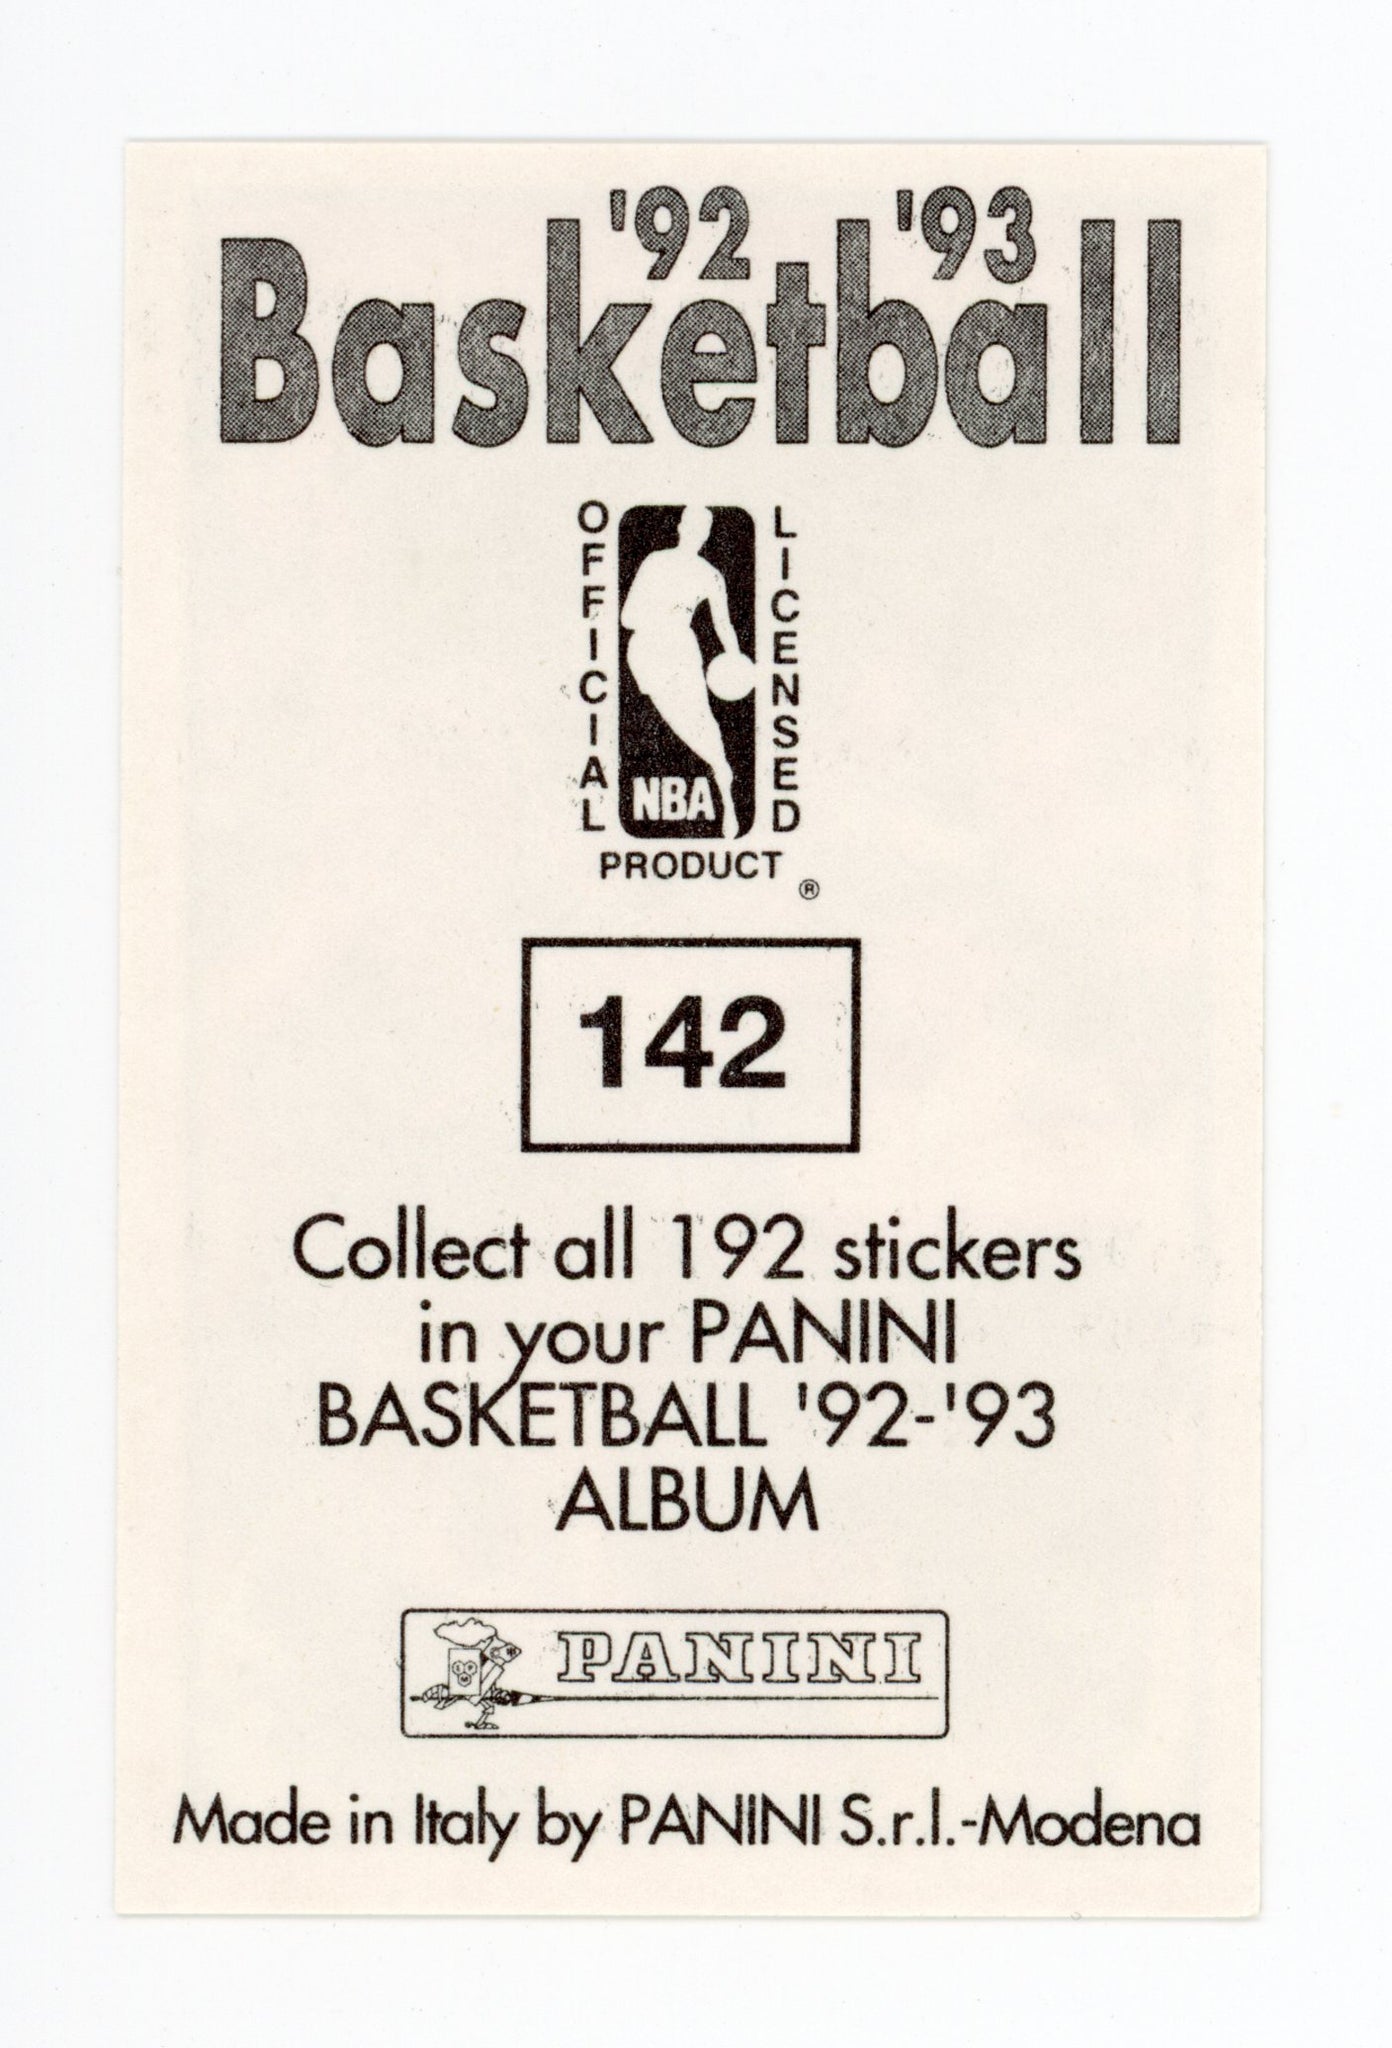 Orlando Woolridge Panini 1992-1993 Basketball Sticker Detroit Pistons #142